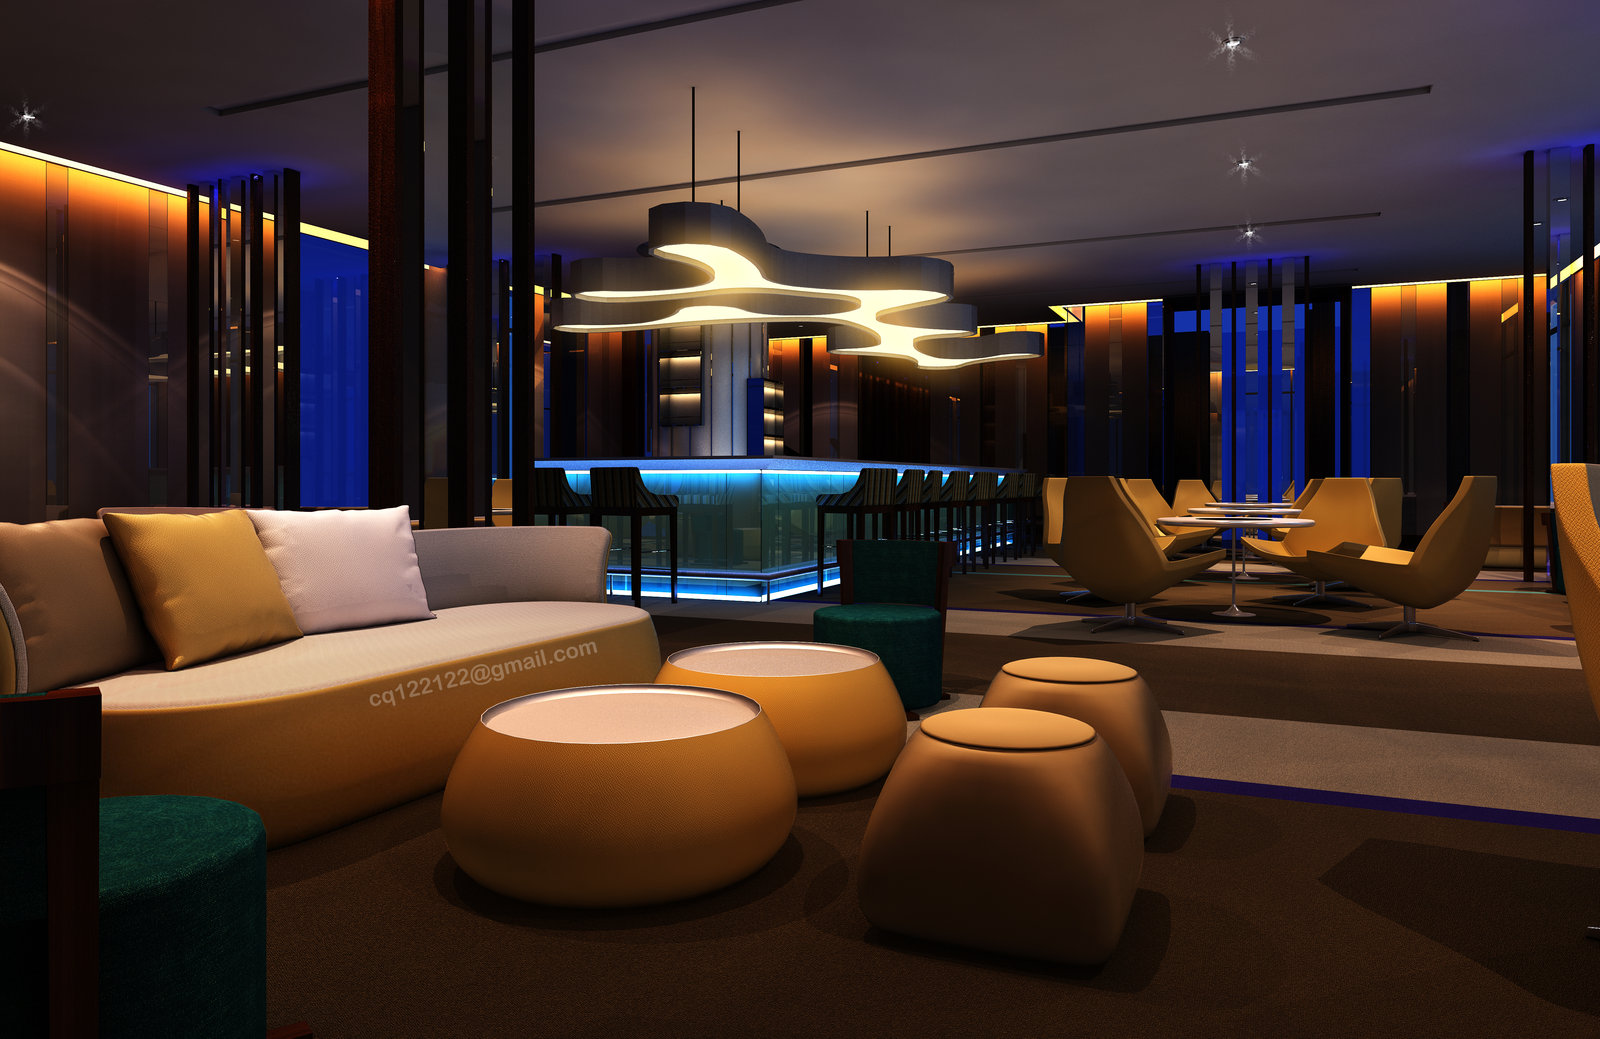 Architecture And Furniture Modern And Elegant Bar Design 2015